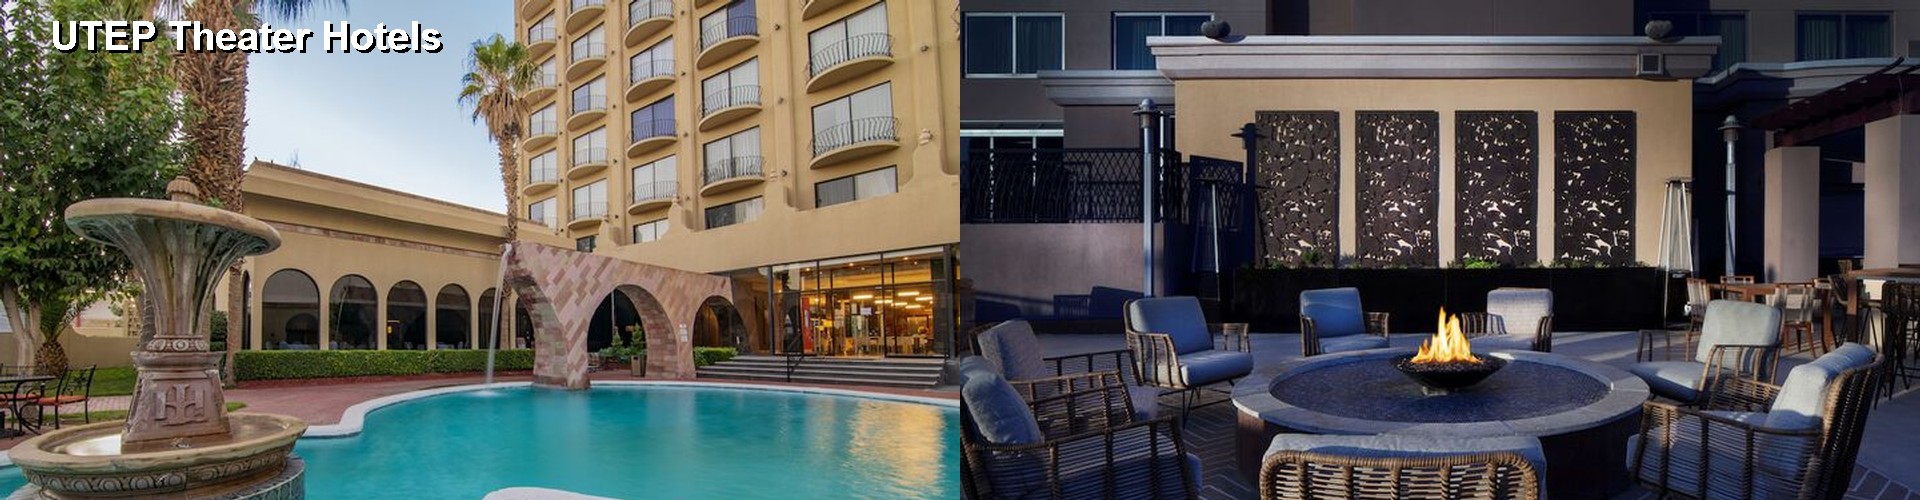 5 Best Hotels near UTEP Theater